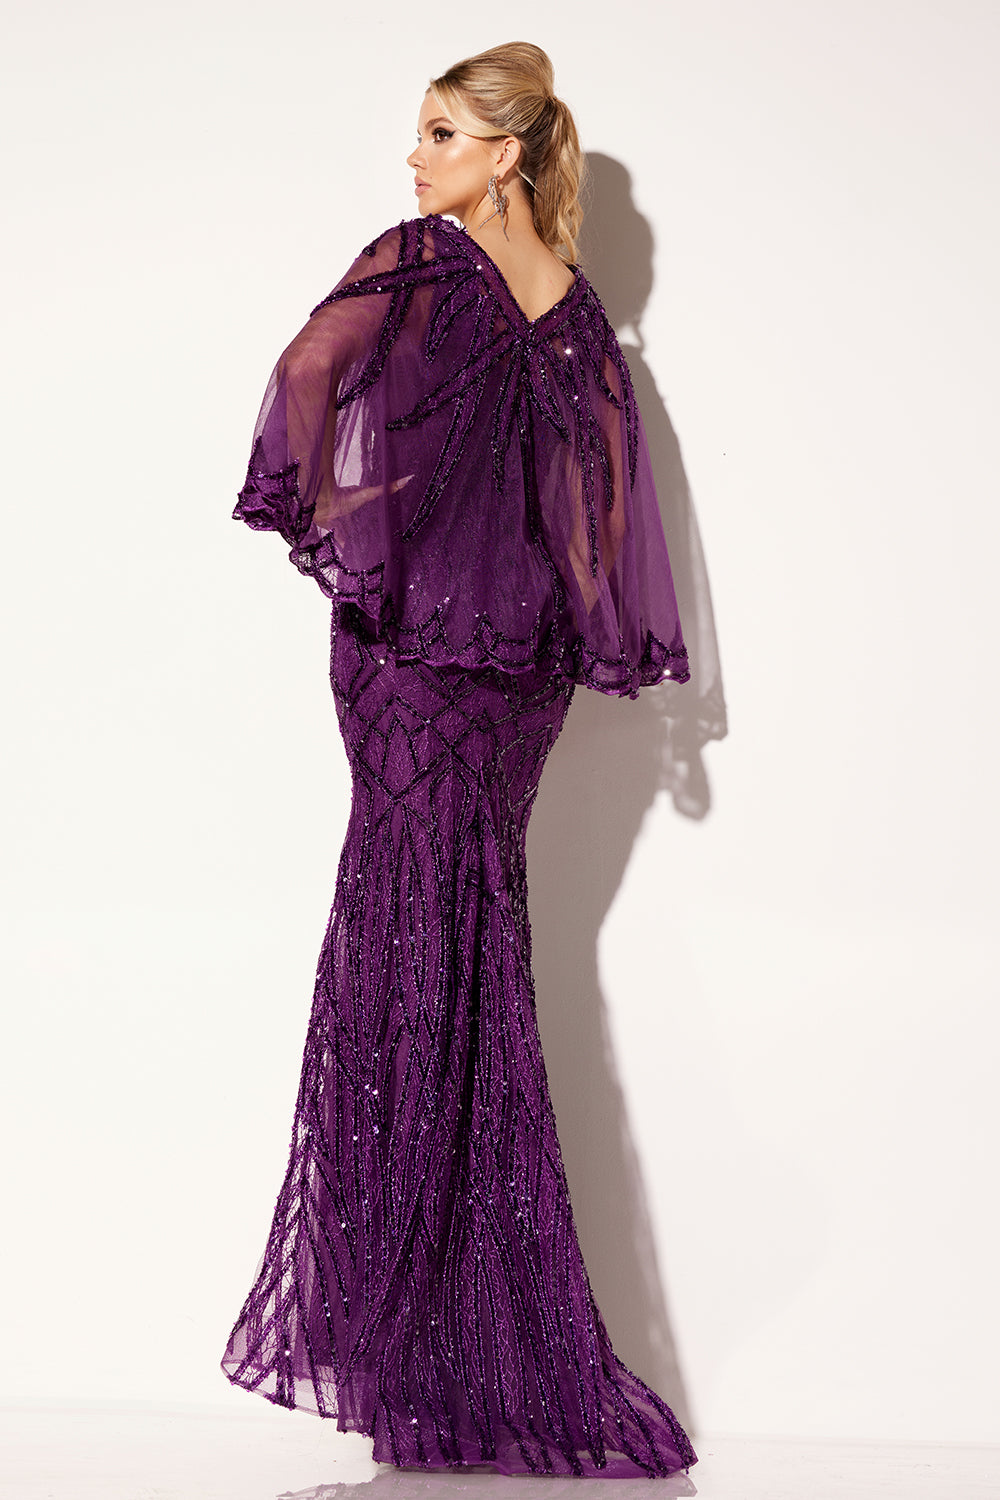 Lucci-Lu-C8109-V-Neck-Neckline-V-Shape-Back-Sweep-Train-Embroidered-Tulle-Mermaid-Purple-Evening-Dress-B-Chic-Fashion-Prom-Dress